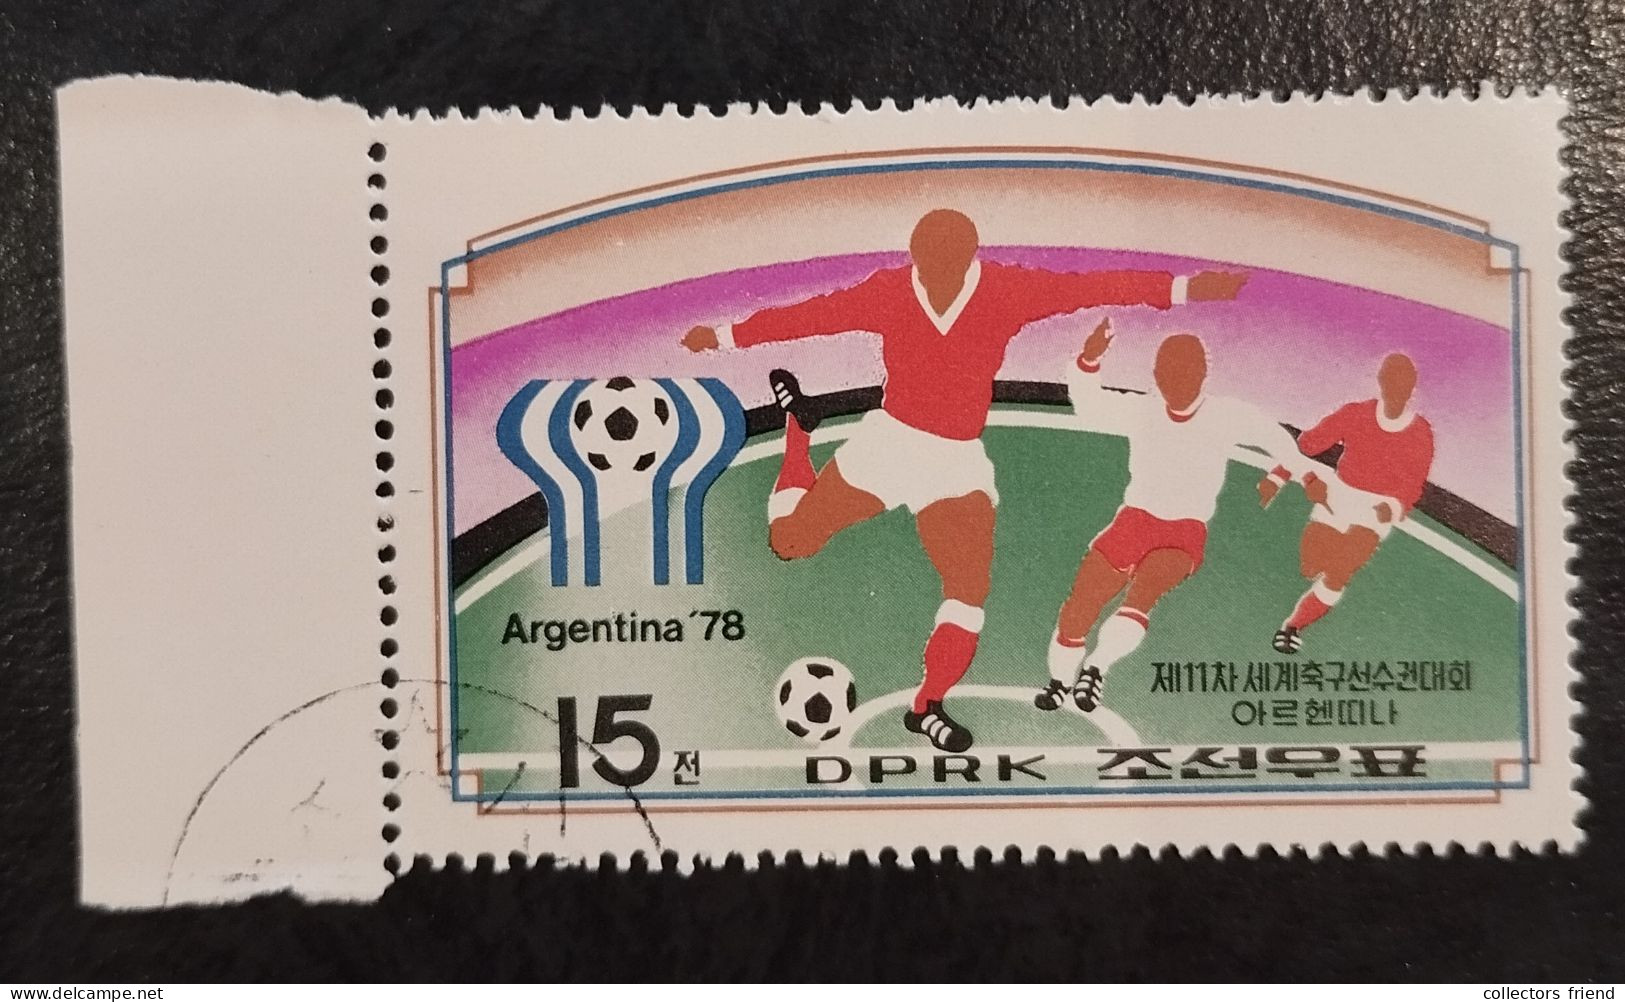 COREE DU NORD, NORTH KOREA, Nordkorea - 1978 - FOOTBALL FUSSBALL SOCCER - Used - 1978 – Argentina